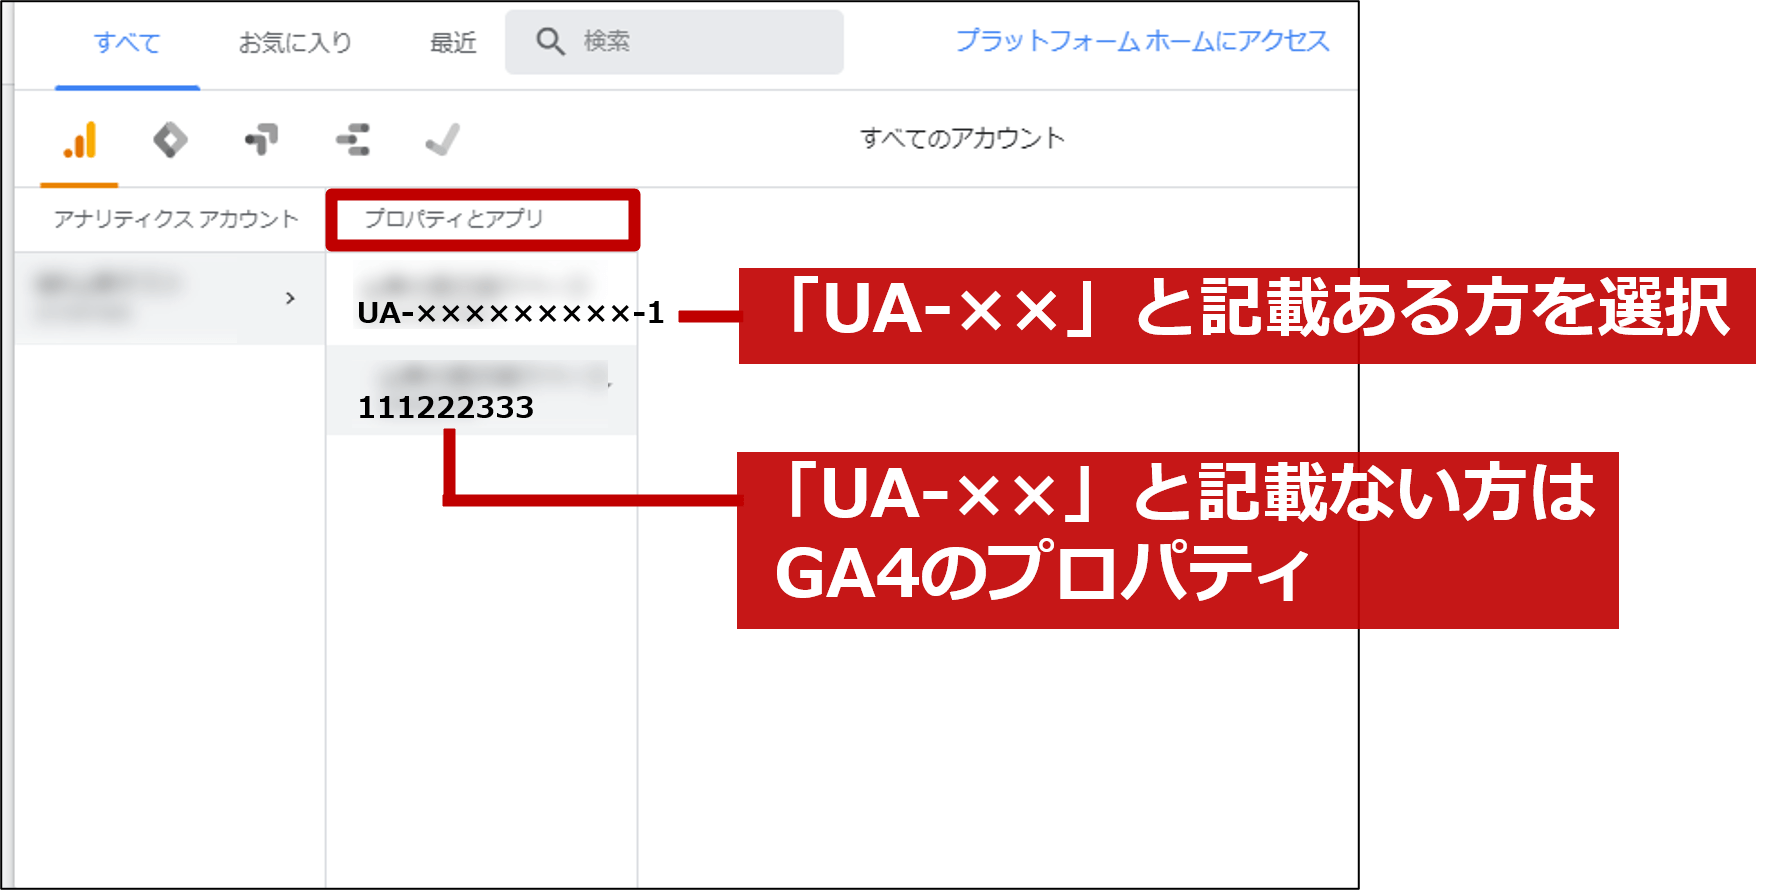 「UA-××」記載されたプロパティを選択